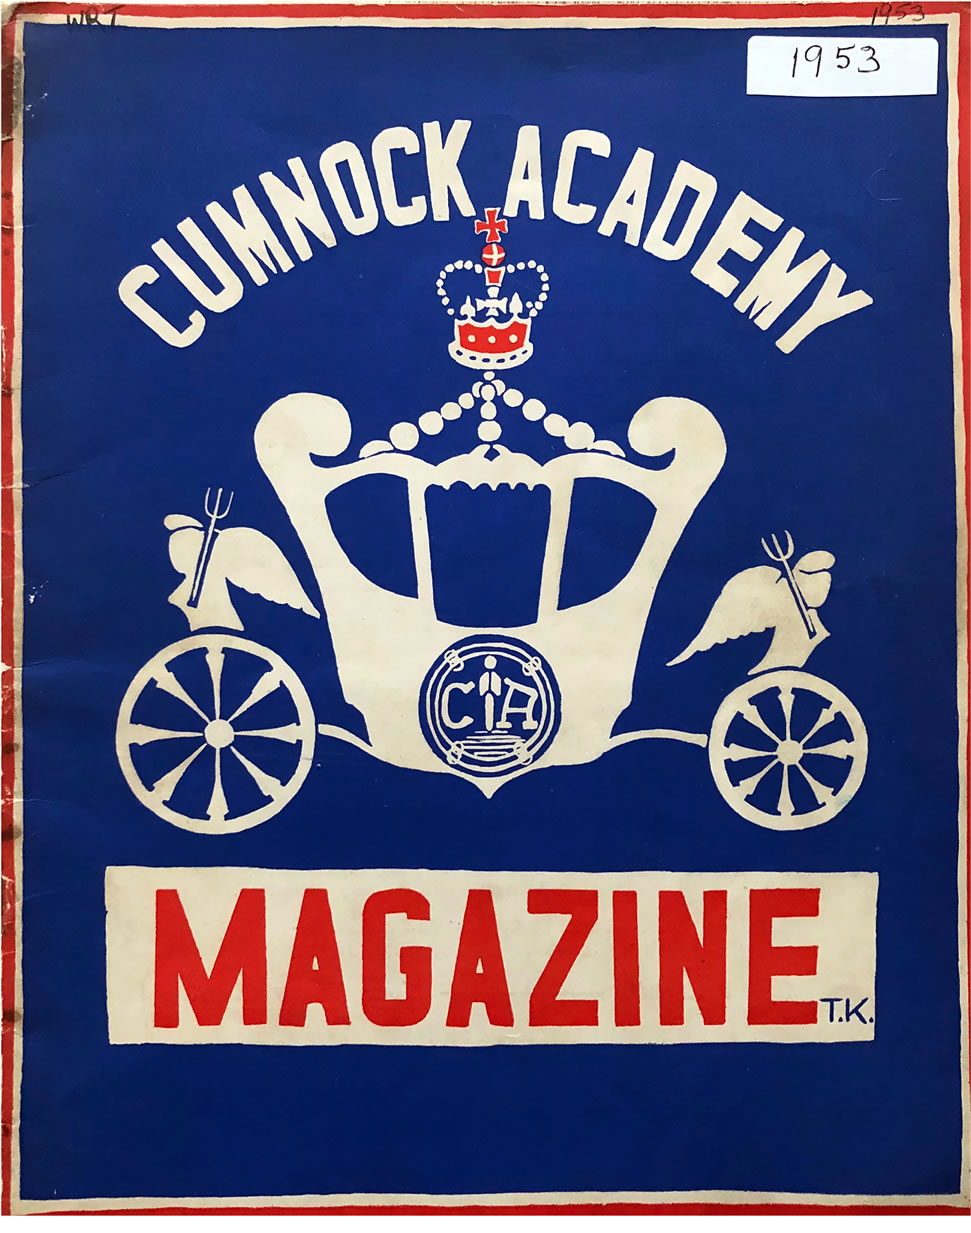 001Cumnock_Academy_Magazine_1953